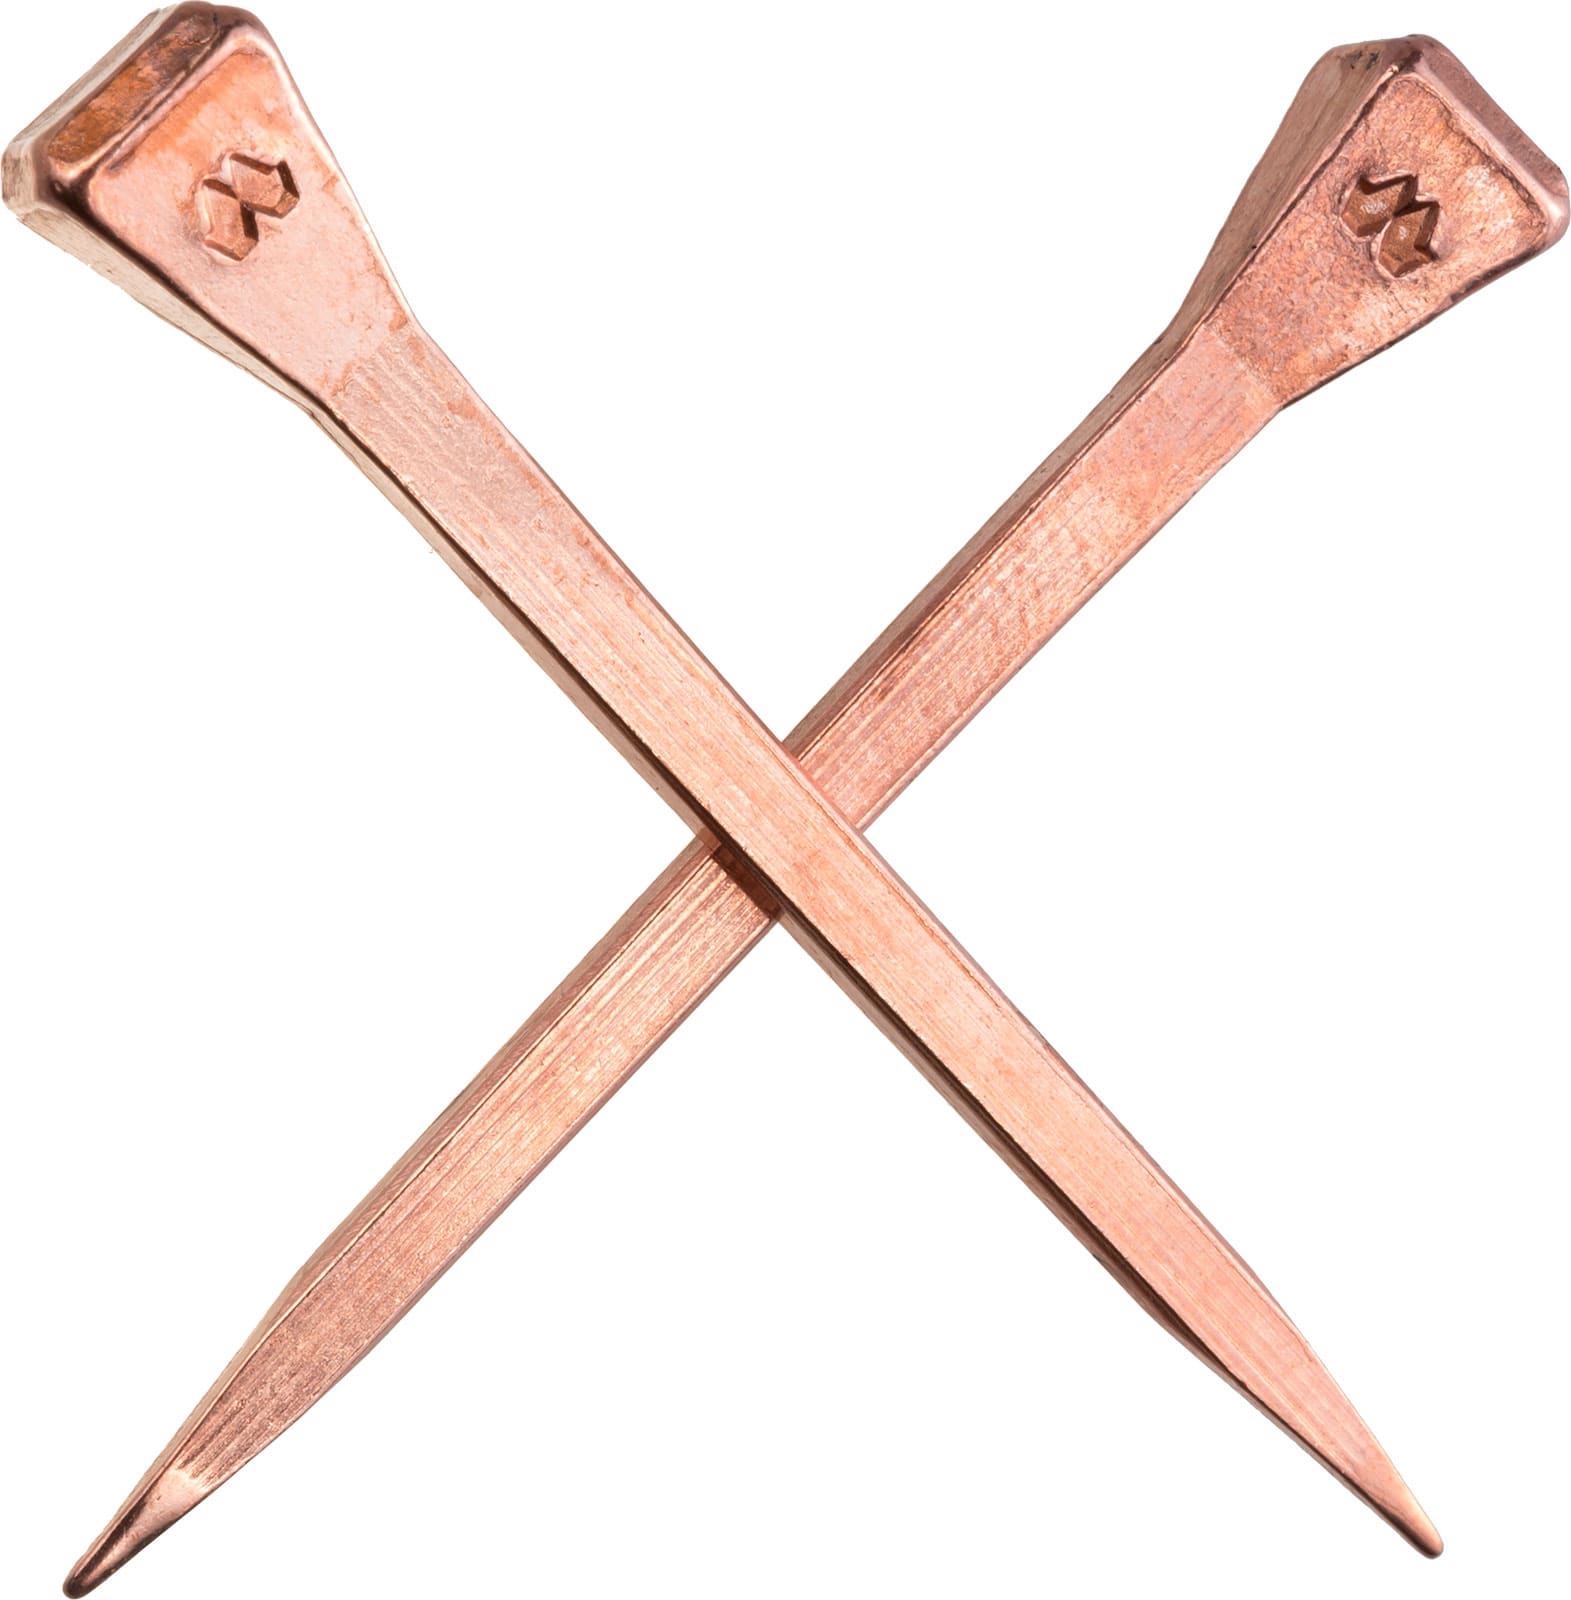 Mustad Copper MX hoof nails, crossed